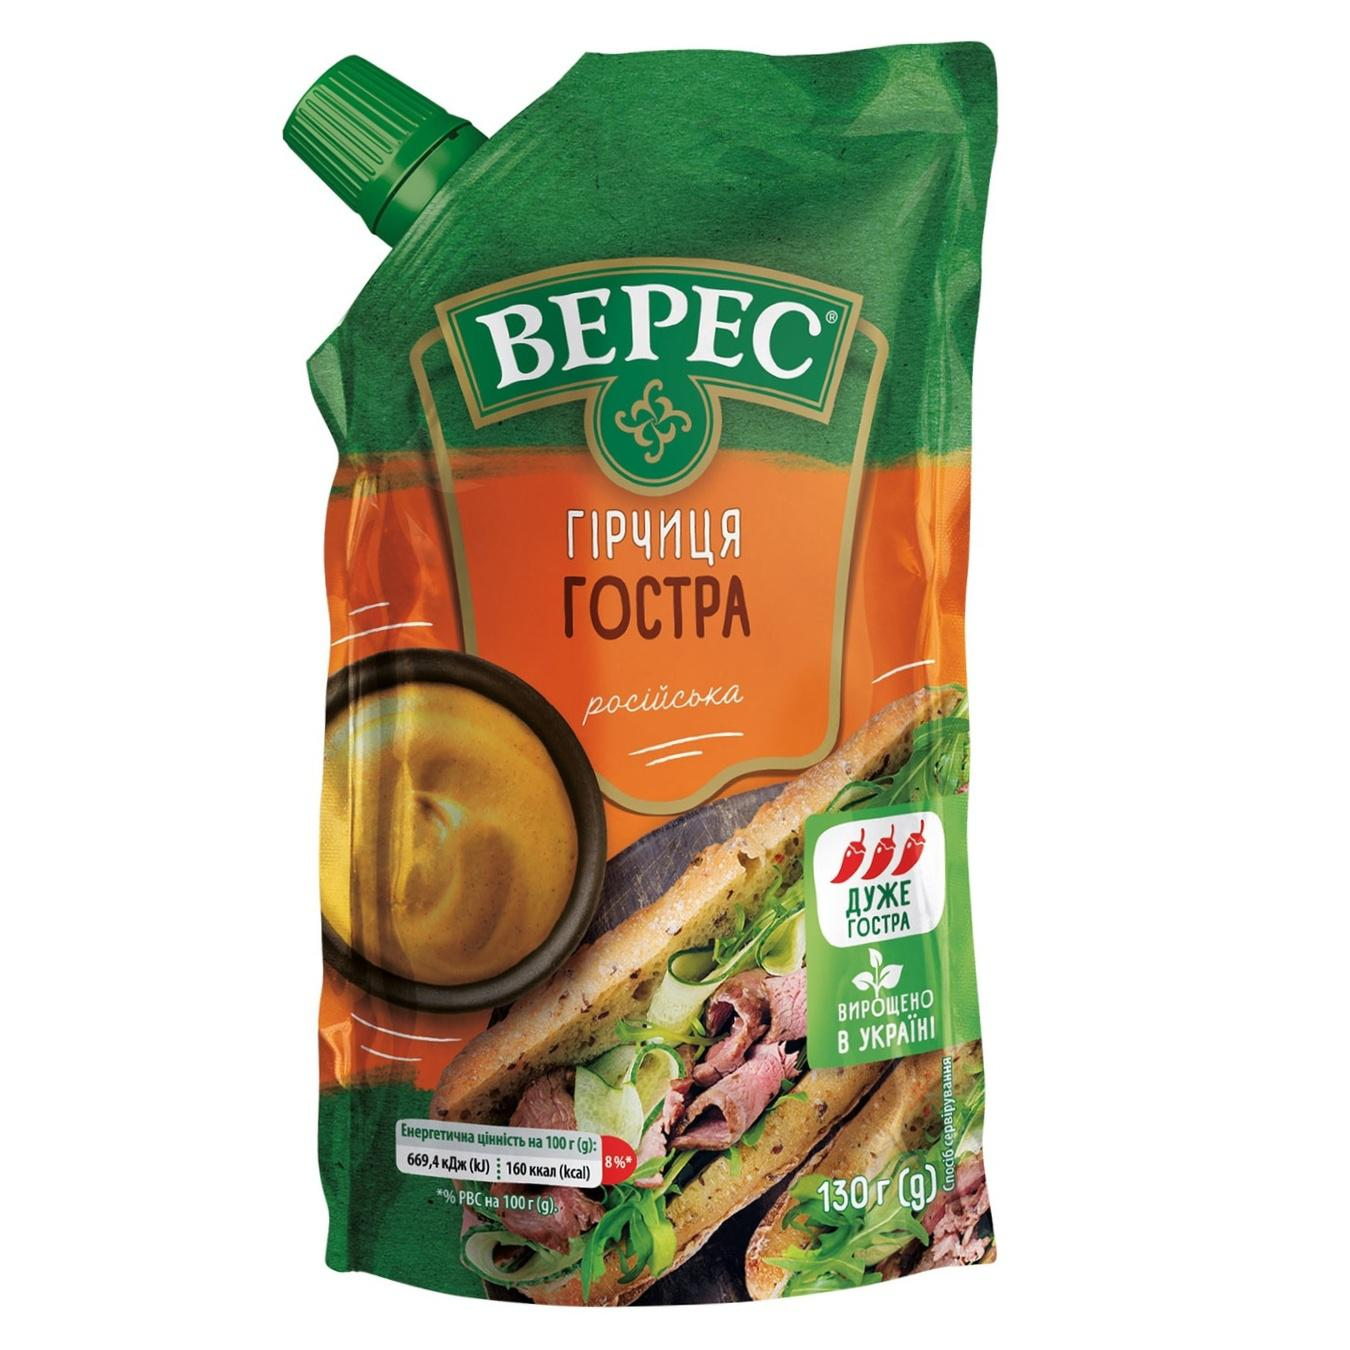 Veres spicy Russian mustard 130g